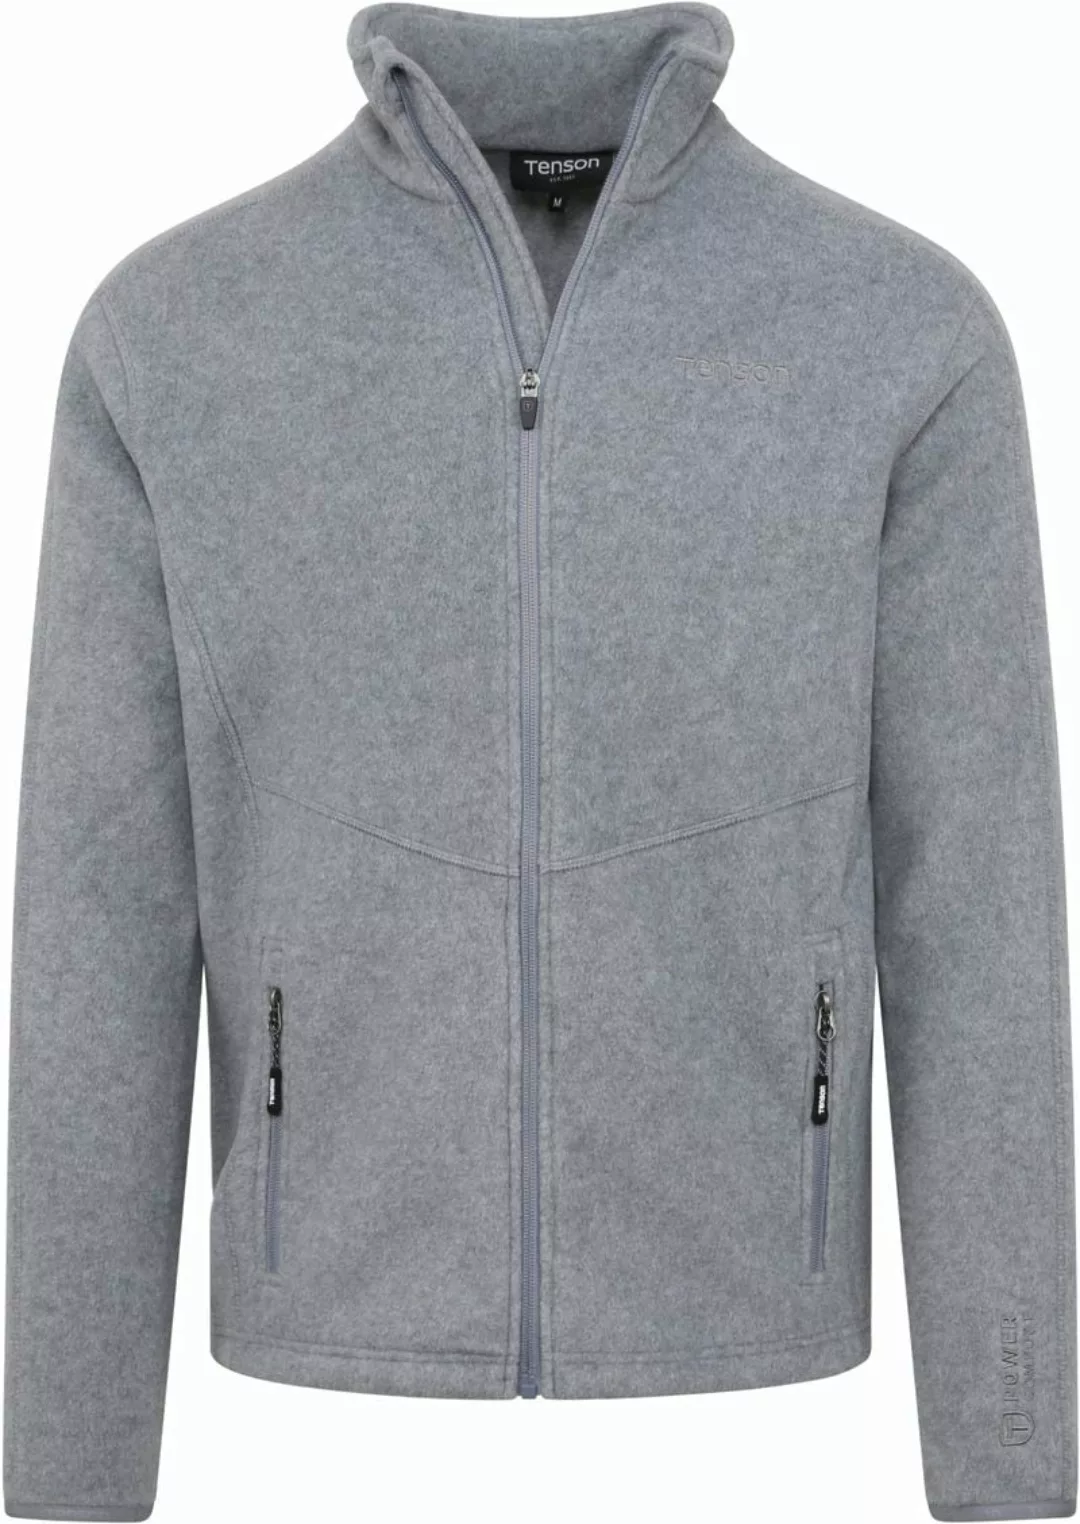 Tenson Miracle Fleece Jacke Grau - Größe XXL günstig online kaufen